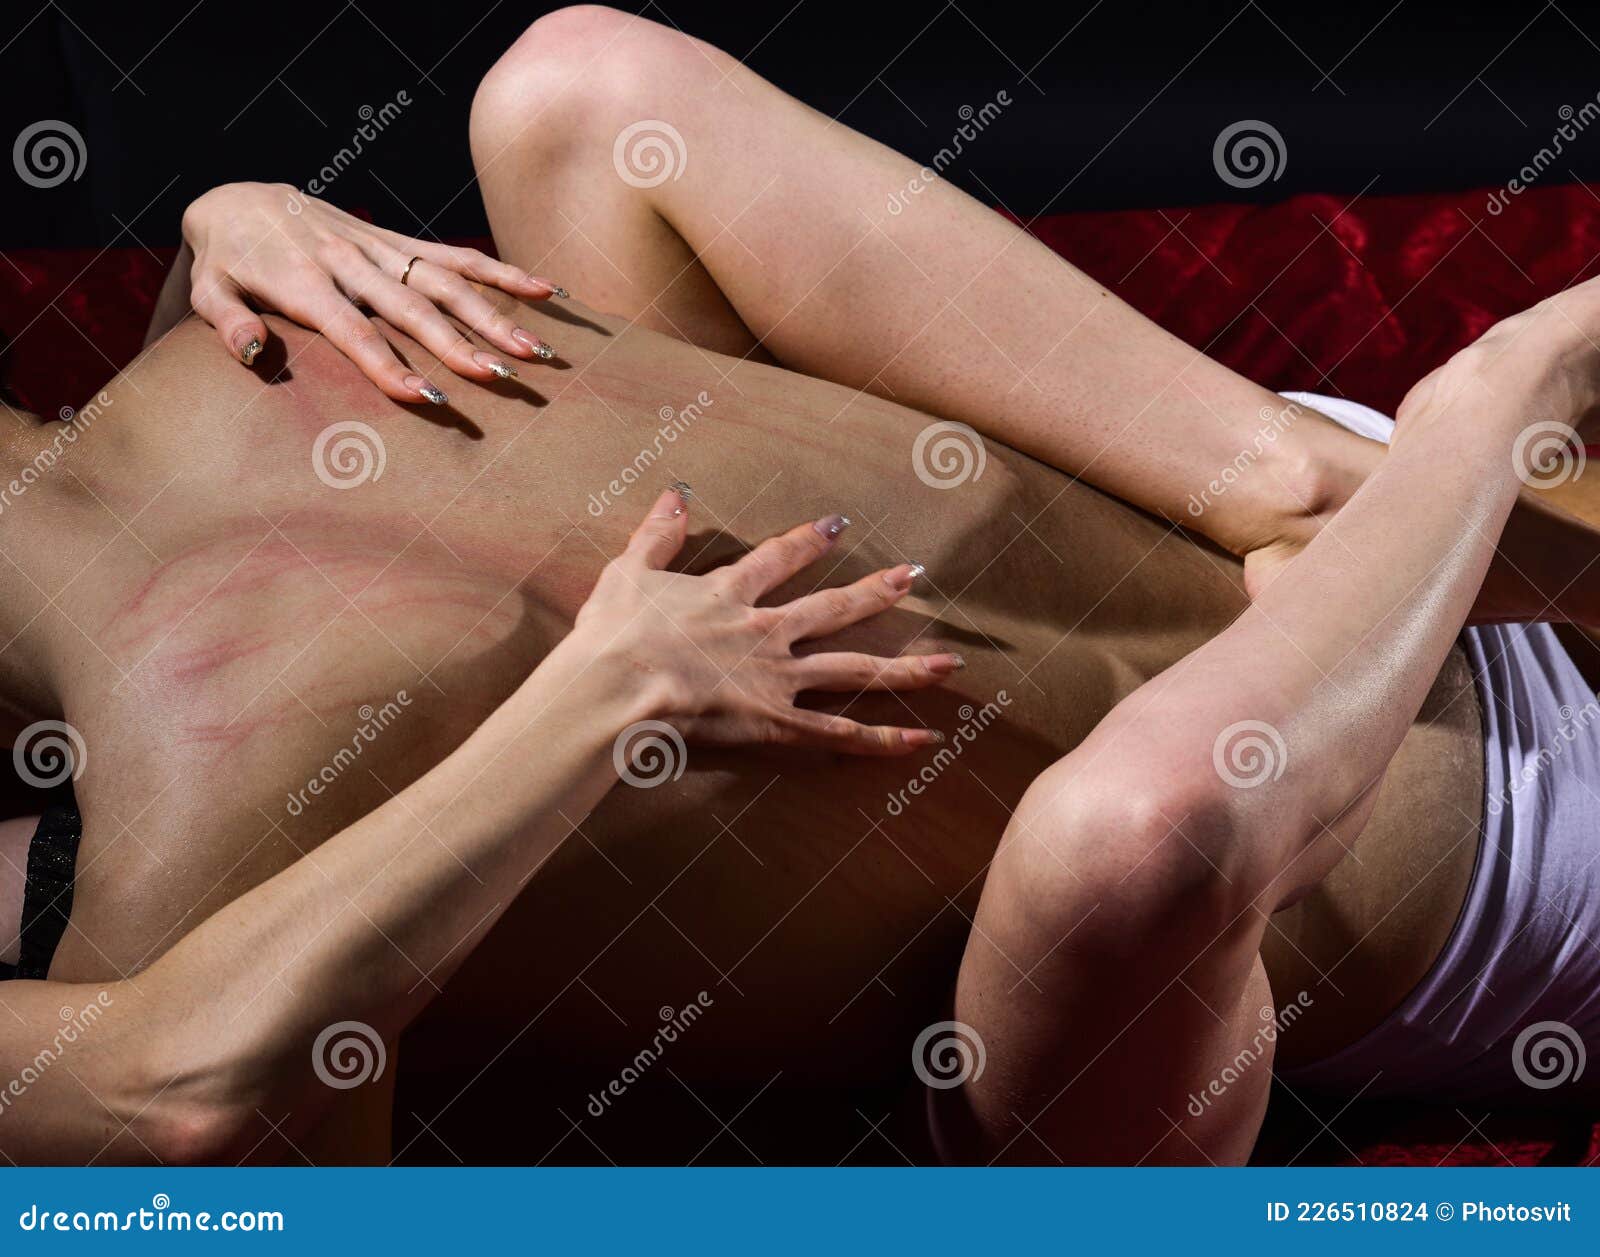 beatrixs tan add photo naked women and men having sex